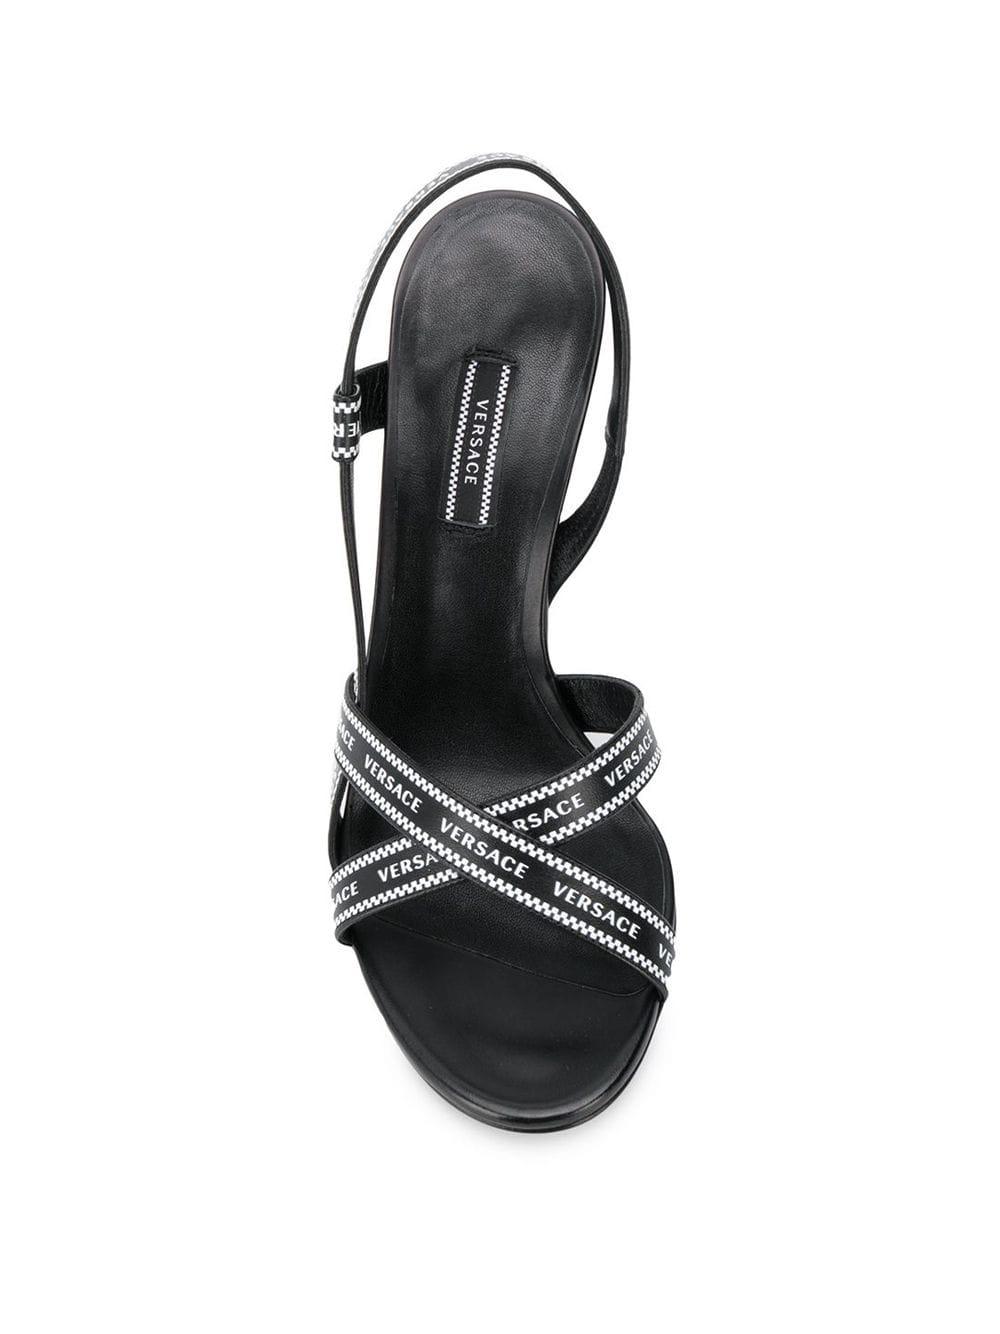 versace logo strap heels